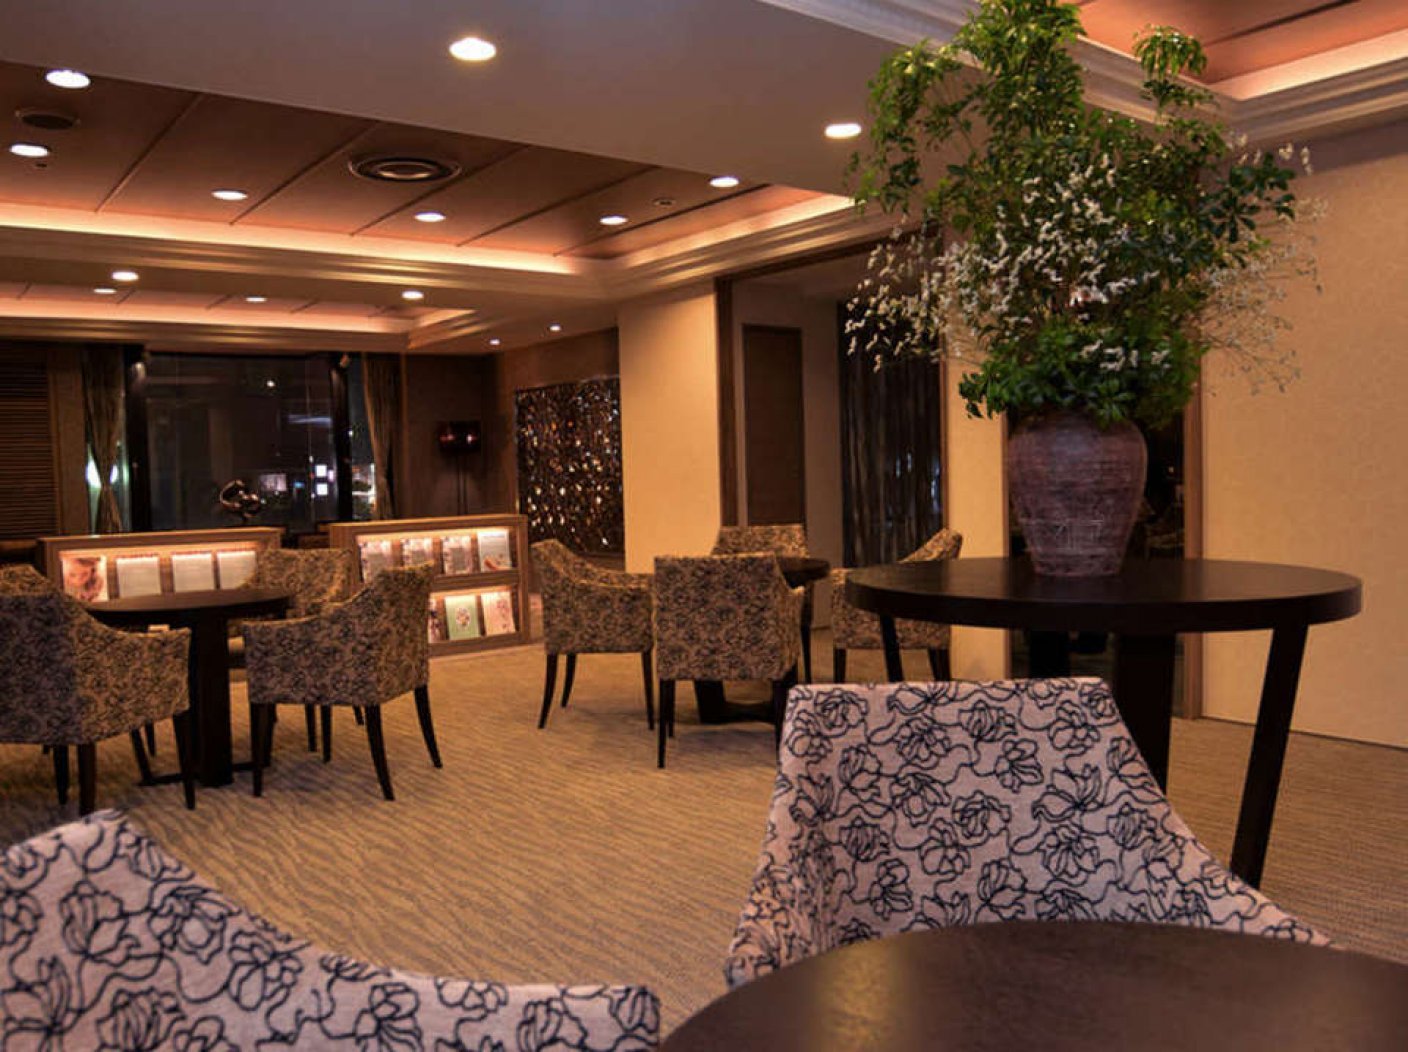 Hotel Lounge -プラトンホテル四日市-の写真 7